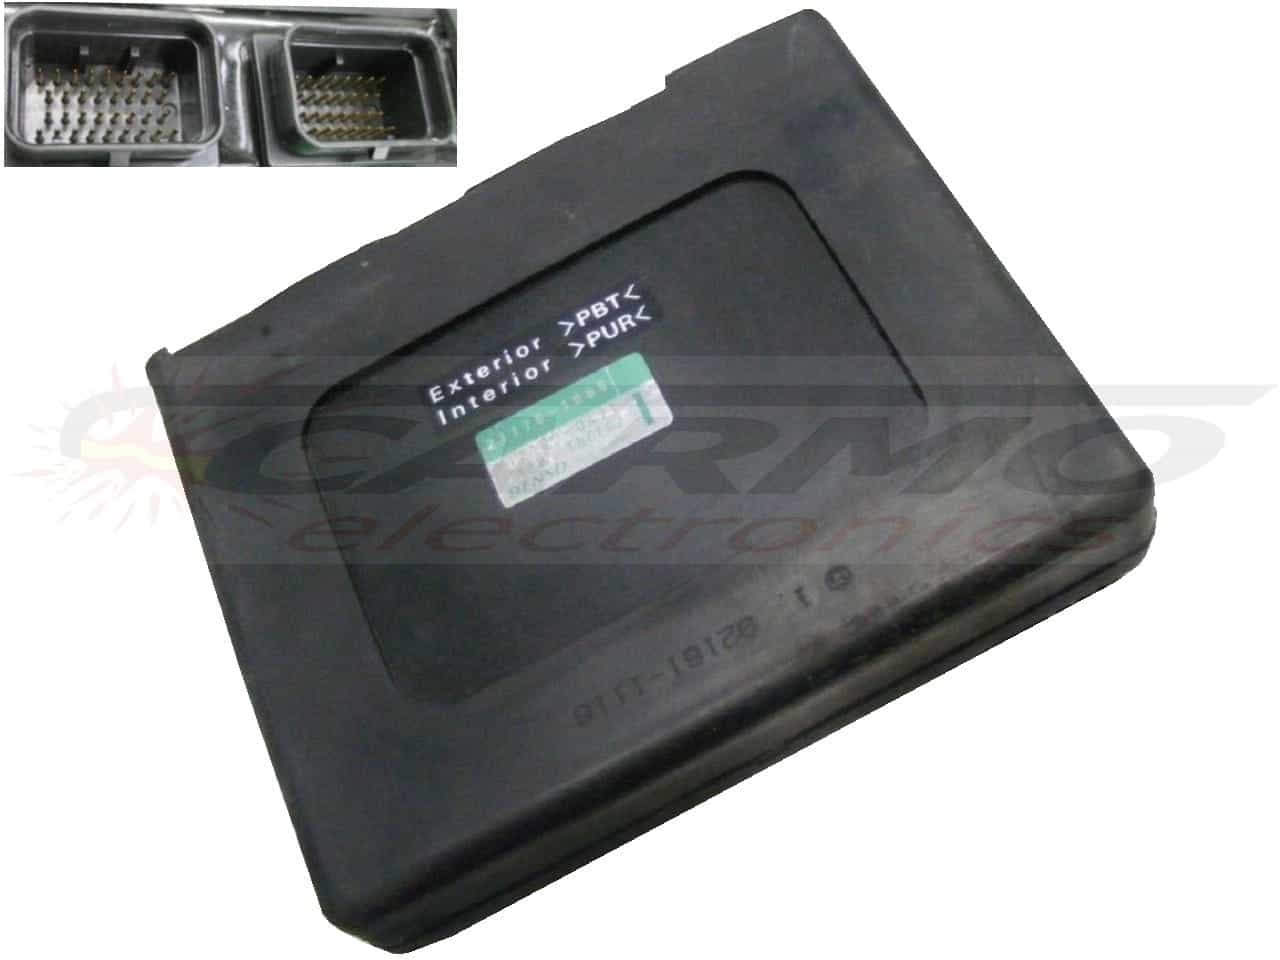 ZX12 1200 (21175-1065, 112100-0470) ECU CDI computer controller